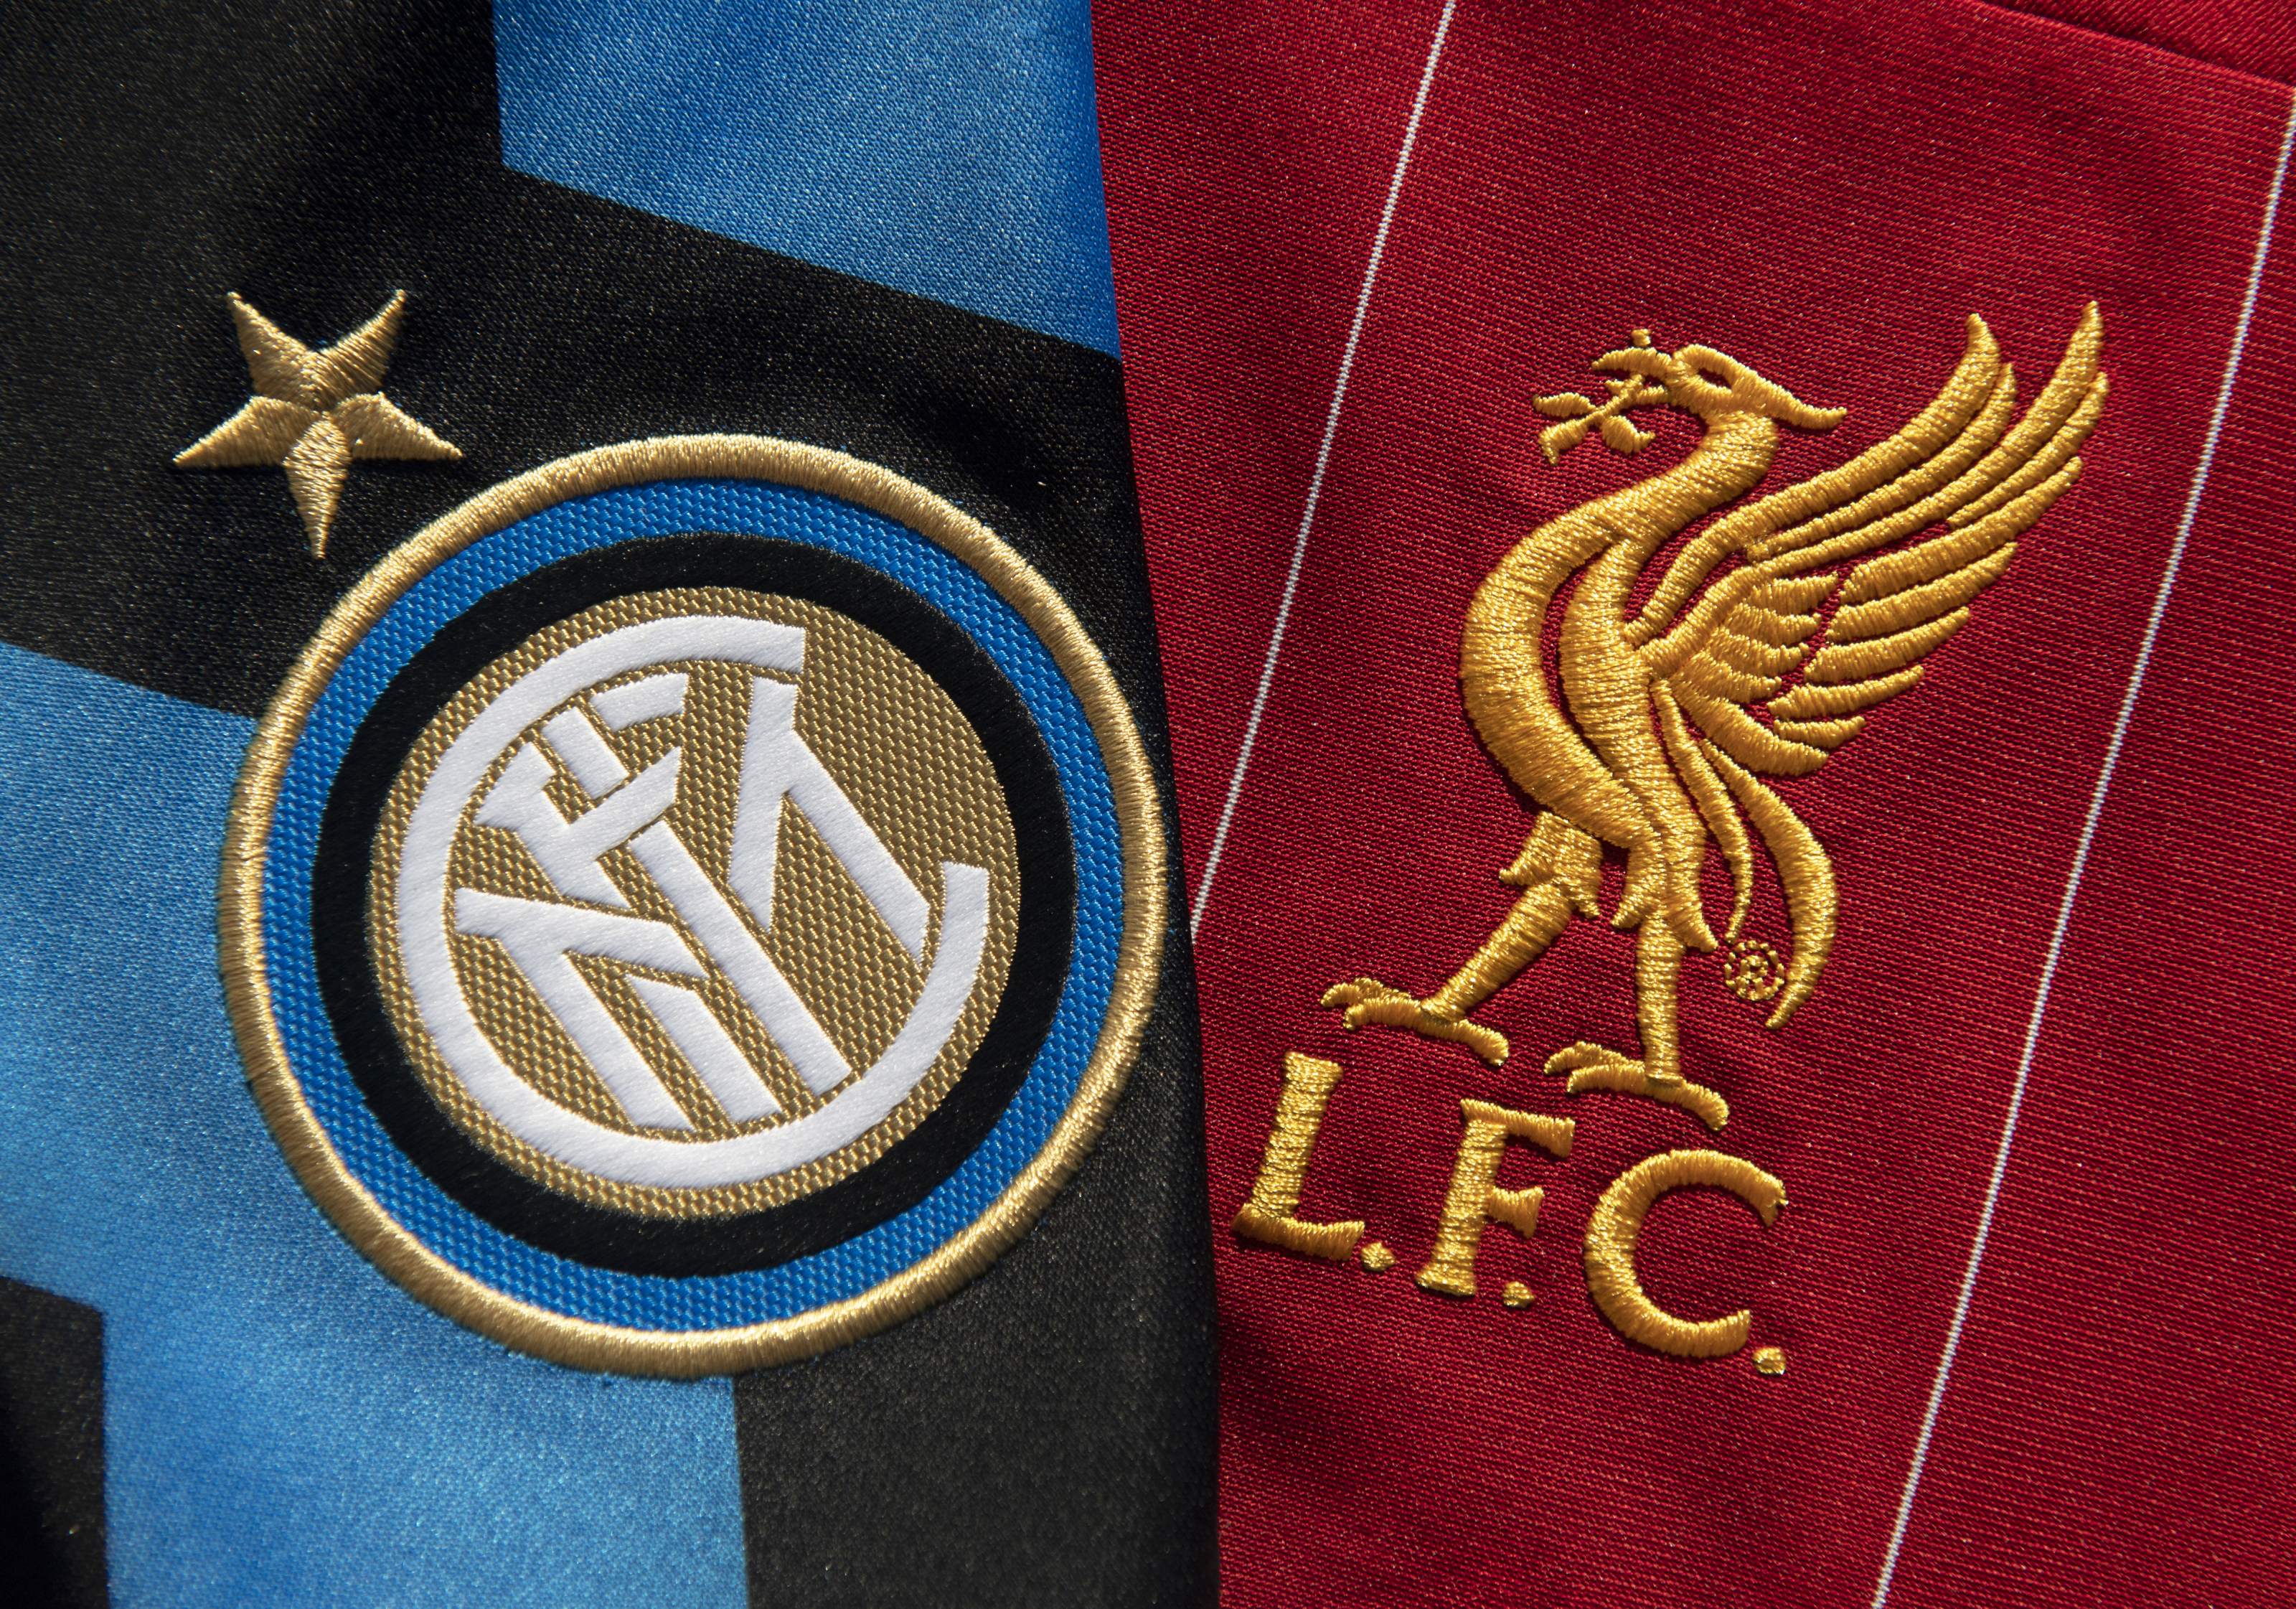 Inter Milan has set a price for Liverpool target midfielder